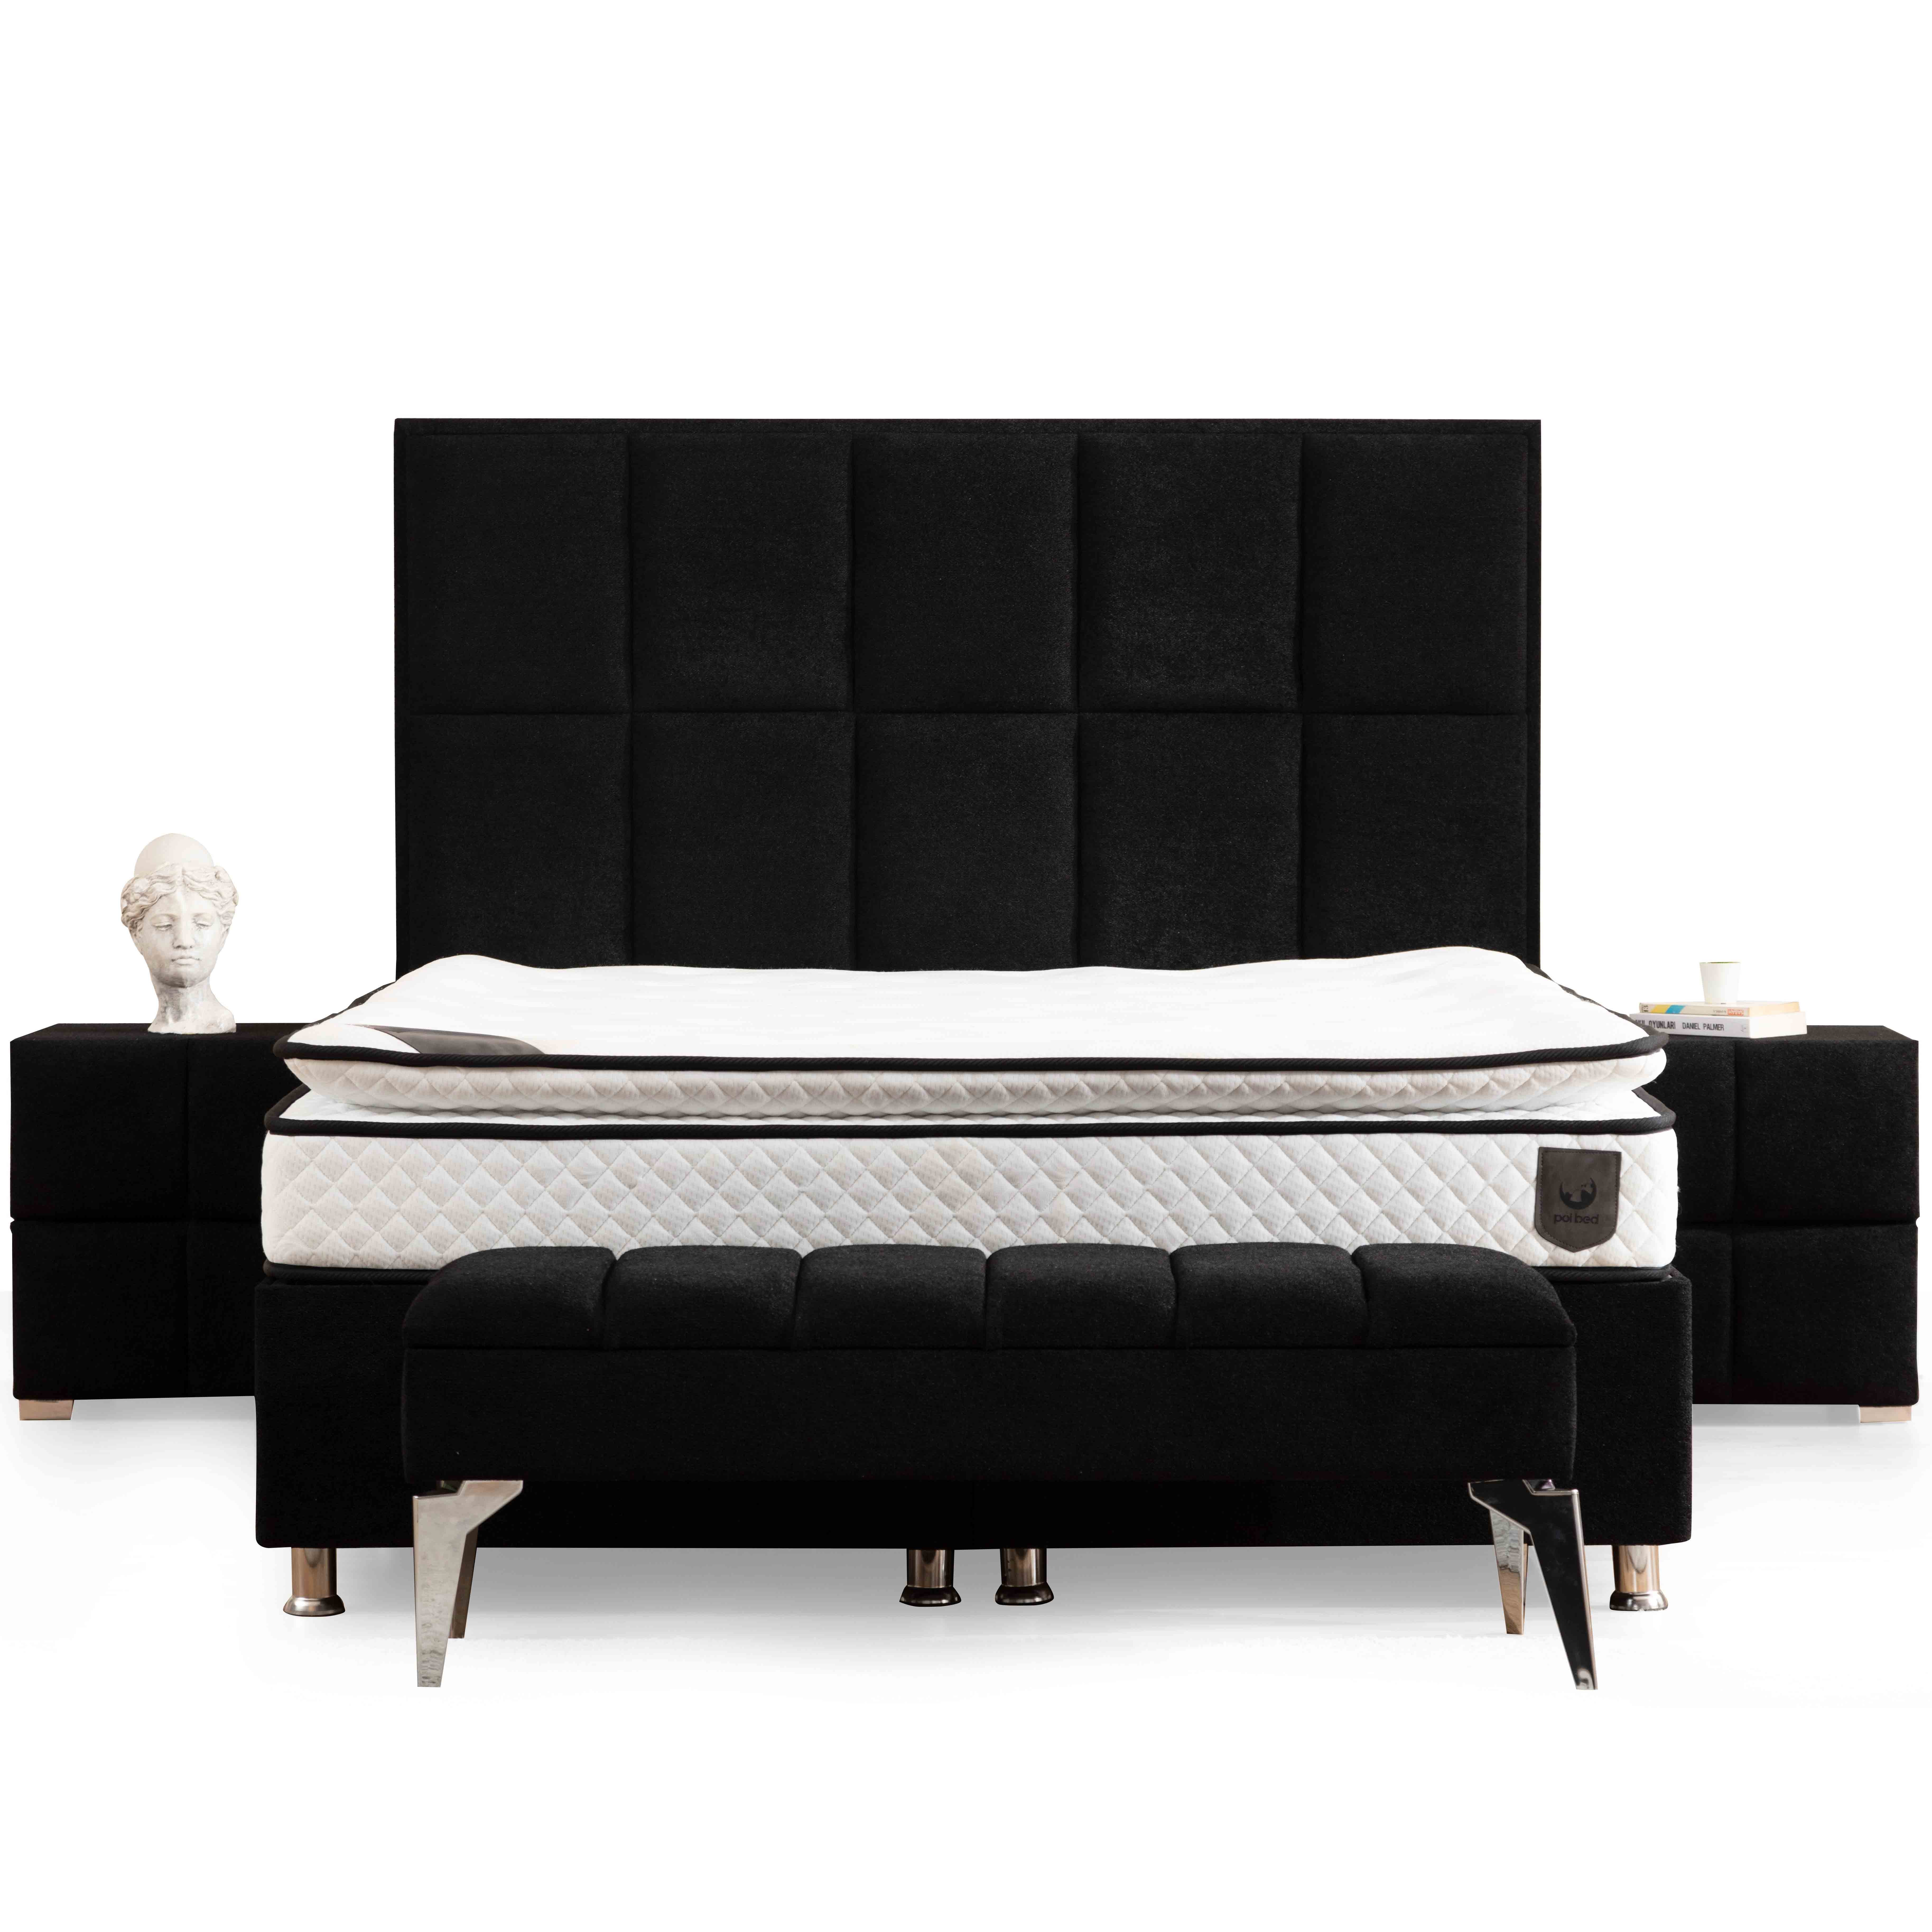 Lovita Bed With Storage 120x200 cm